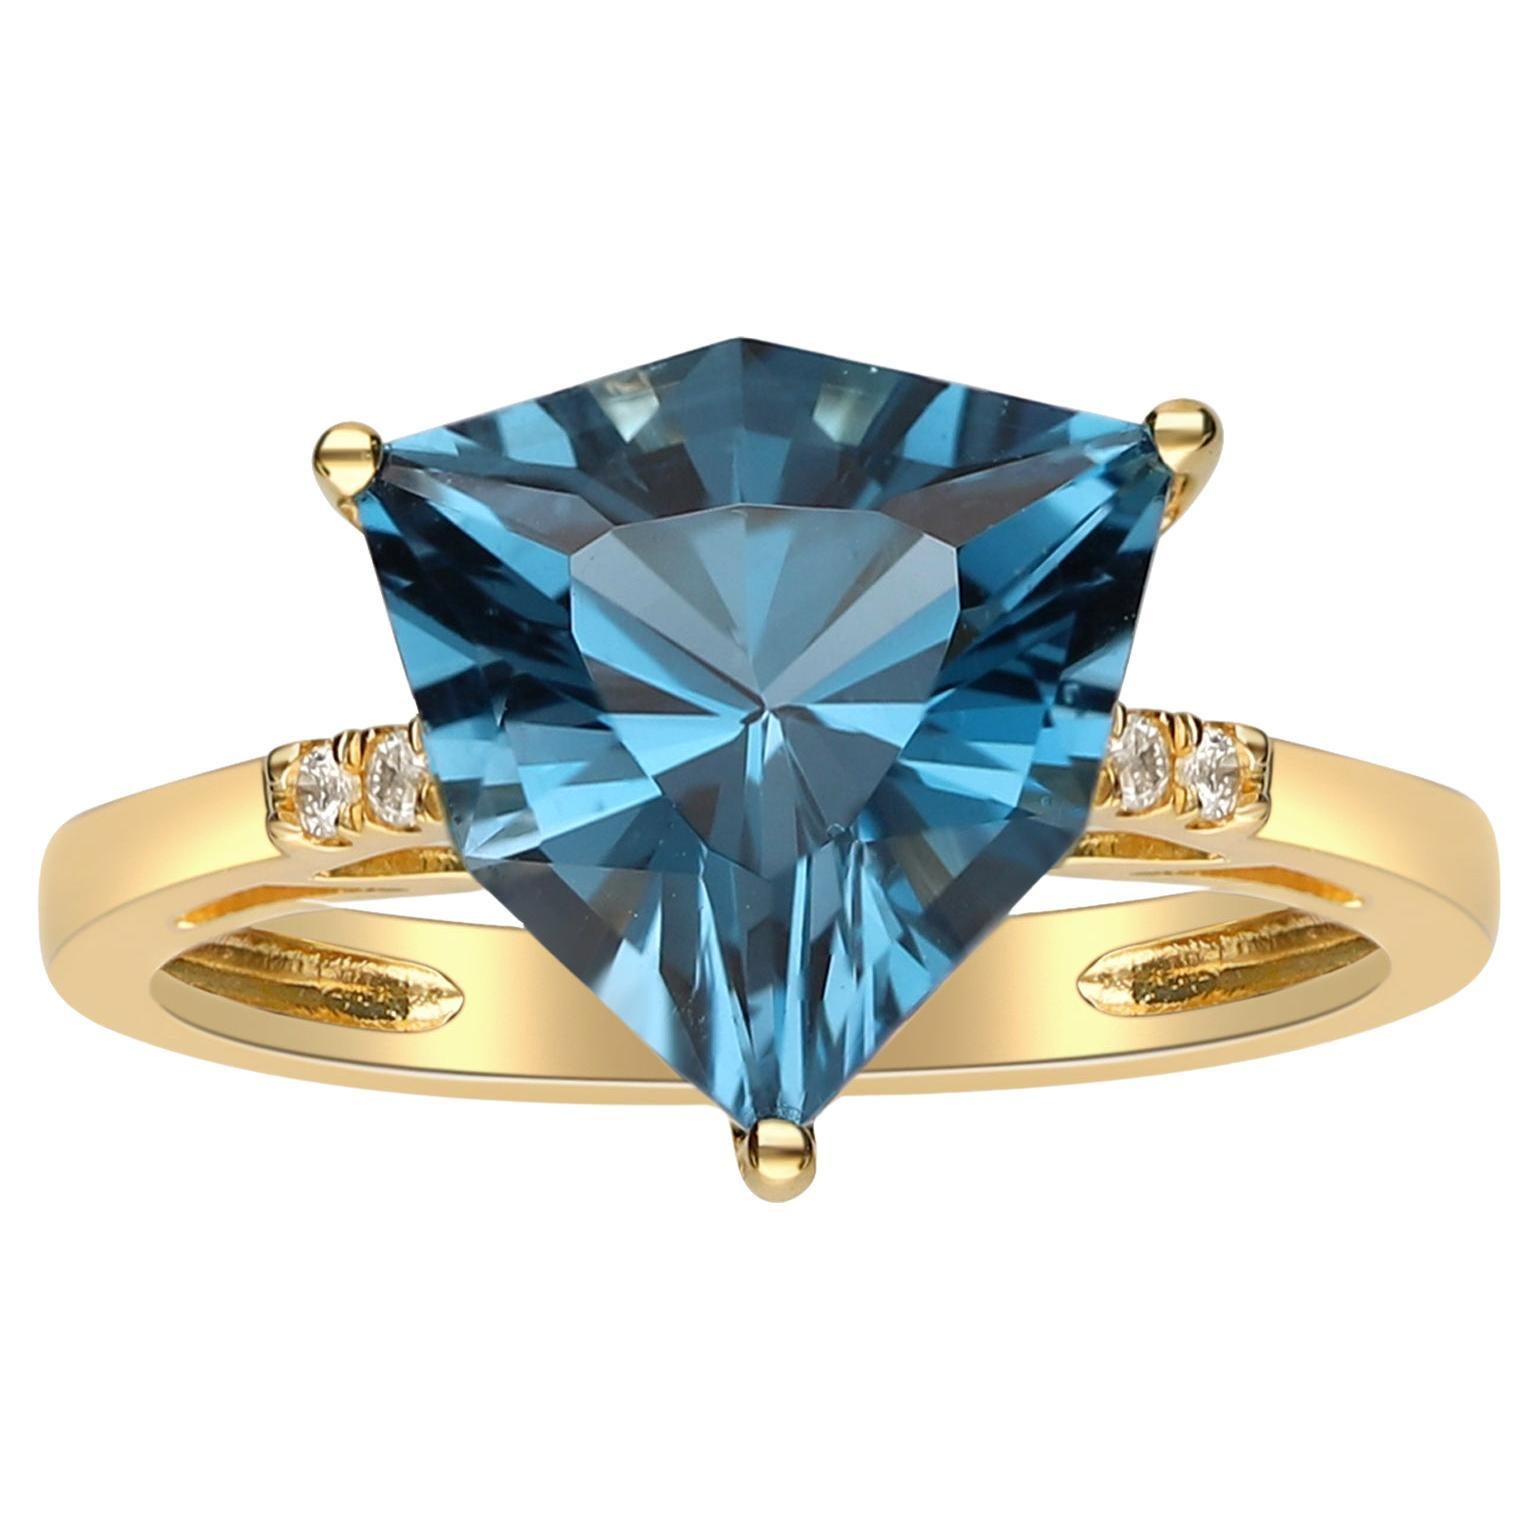 4.33 Carat Fancy-Cut Trillion London Blue Topaz Diamond Accents 14KY Gold Ring